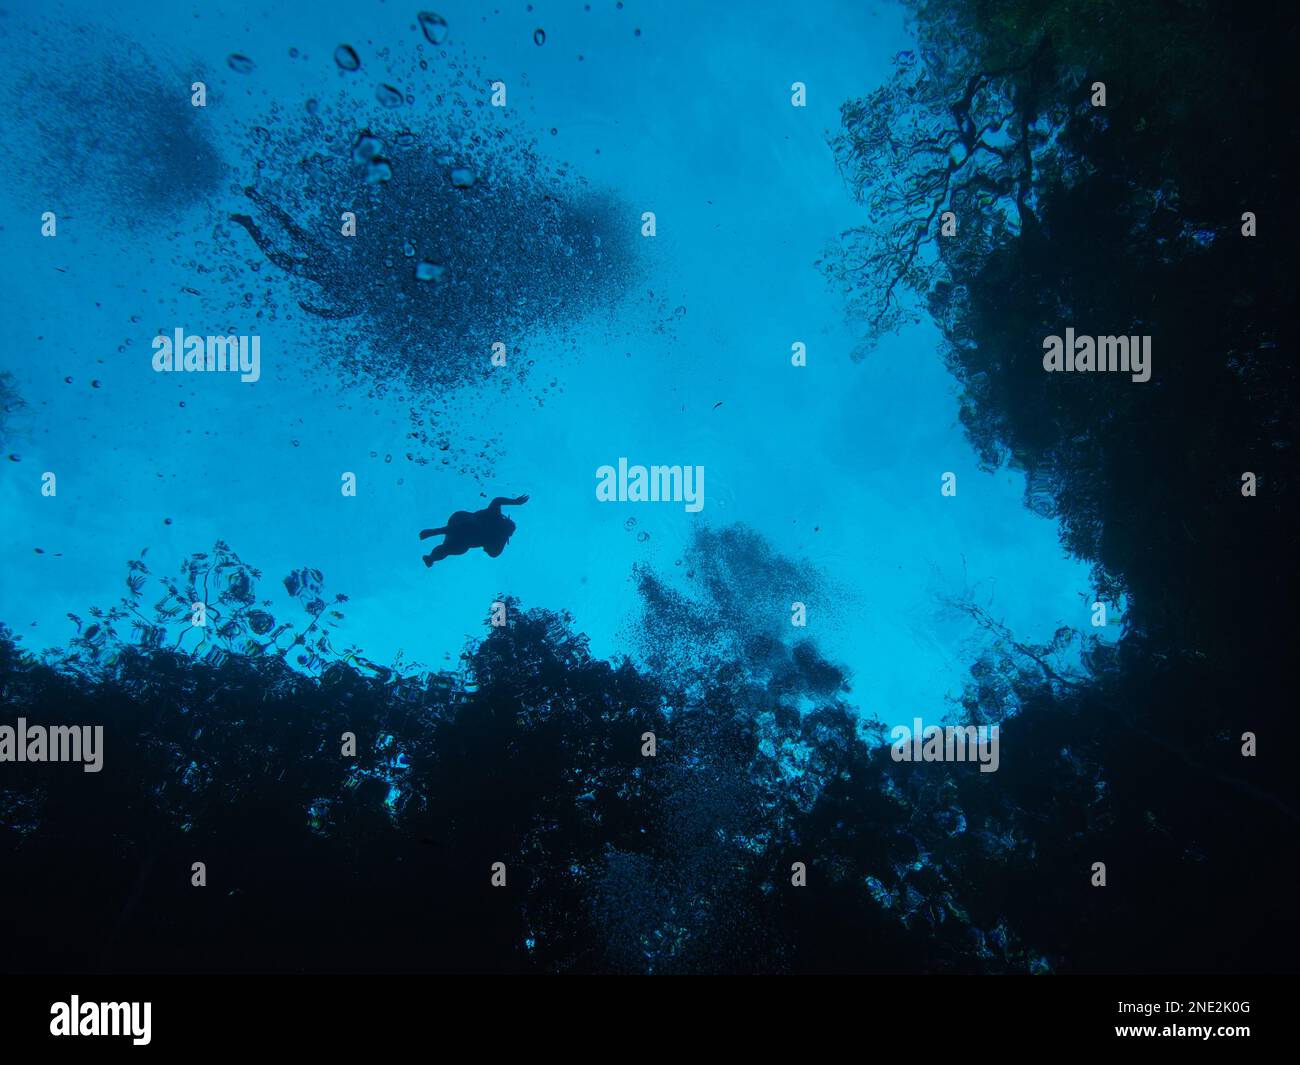 Silhouette of a scube diver between the trees in Lagoa Misteriosa, Bonito, Brazil Stock Photo